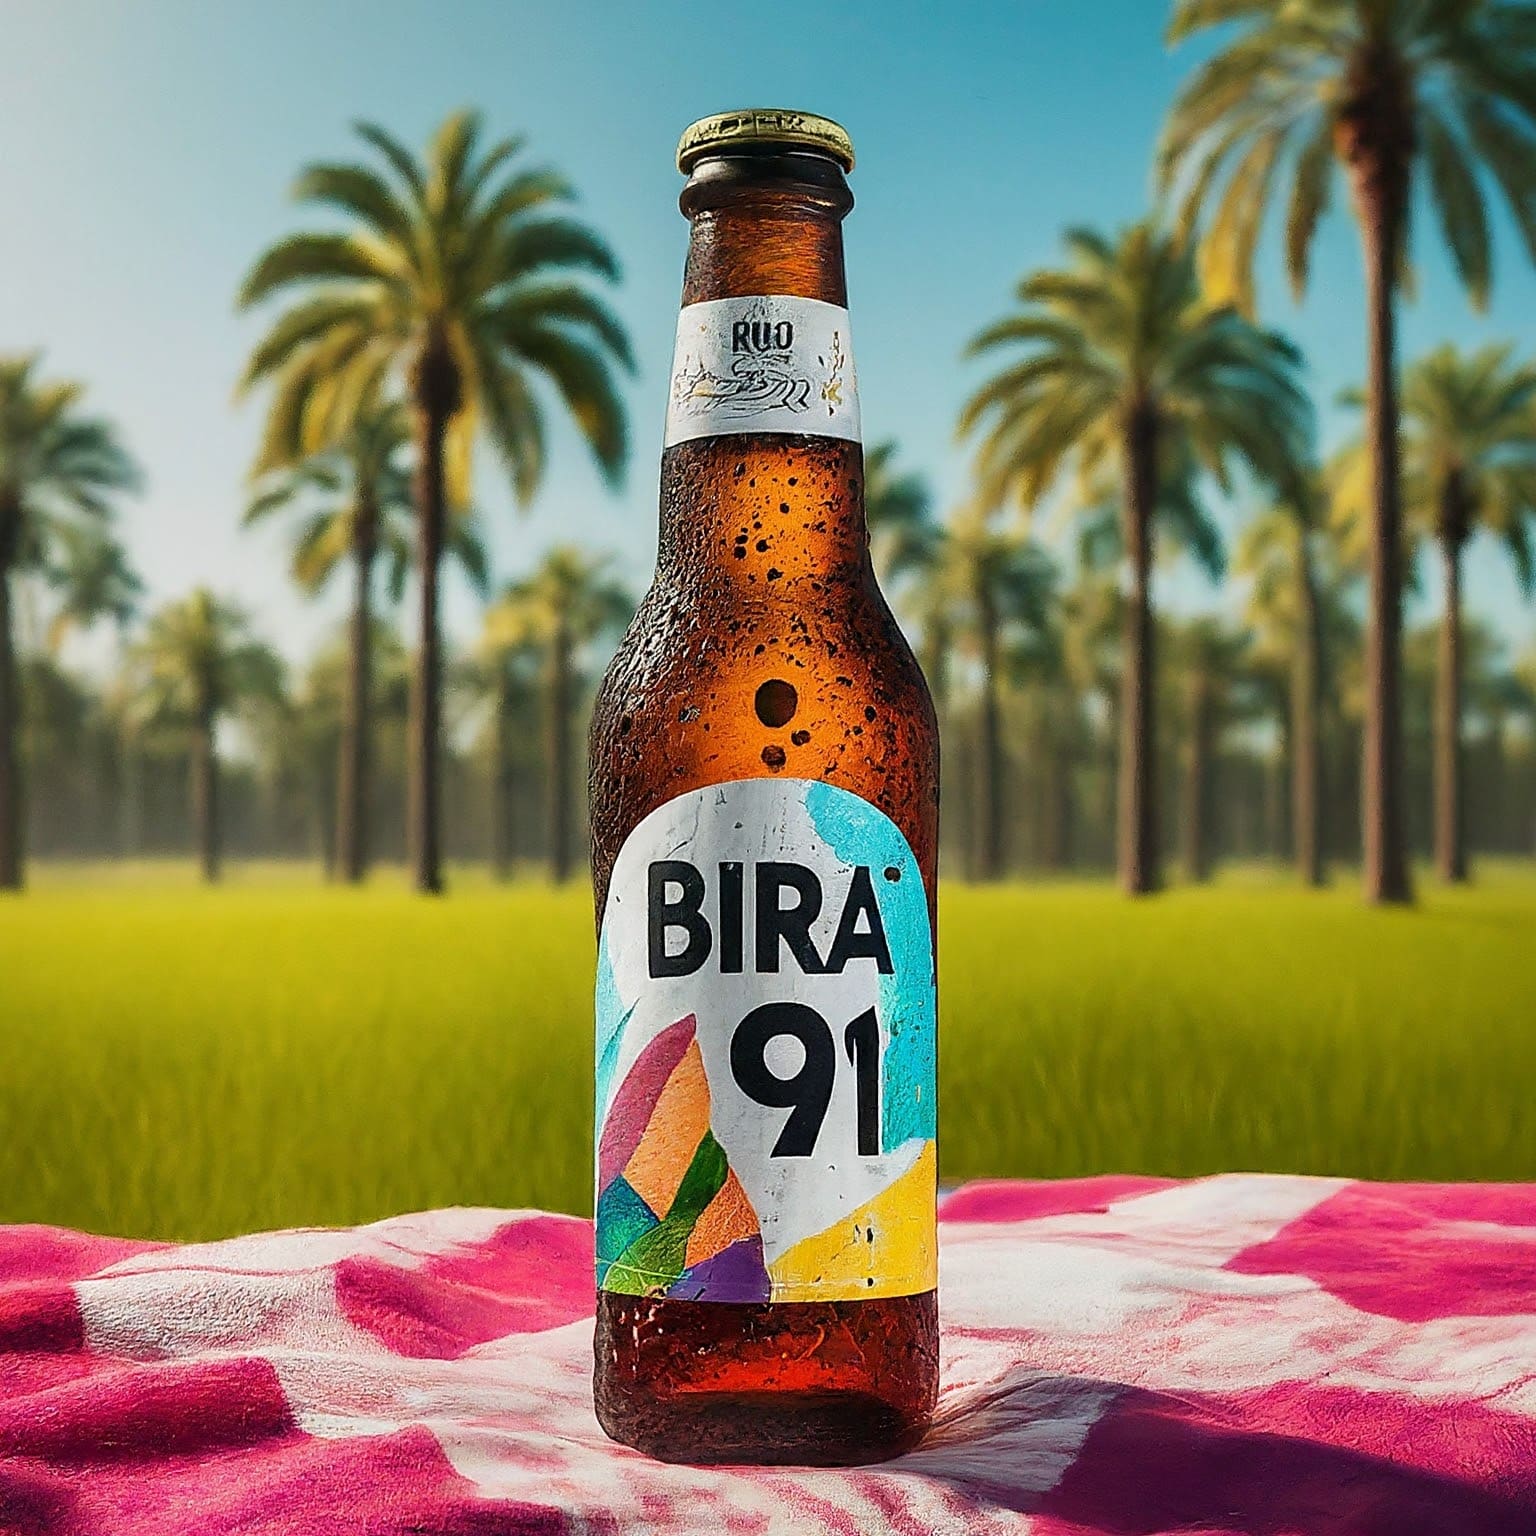 Bira 91 by Bira 91